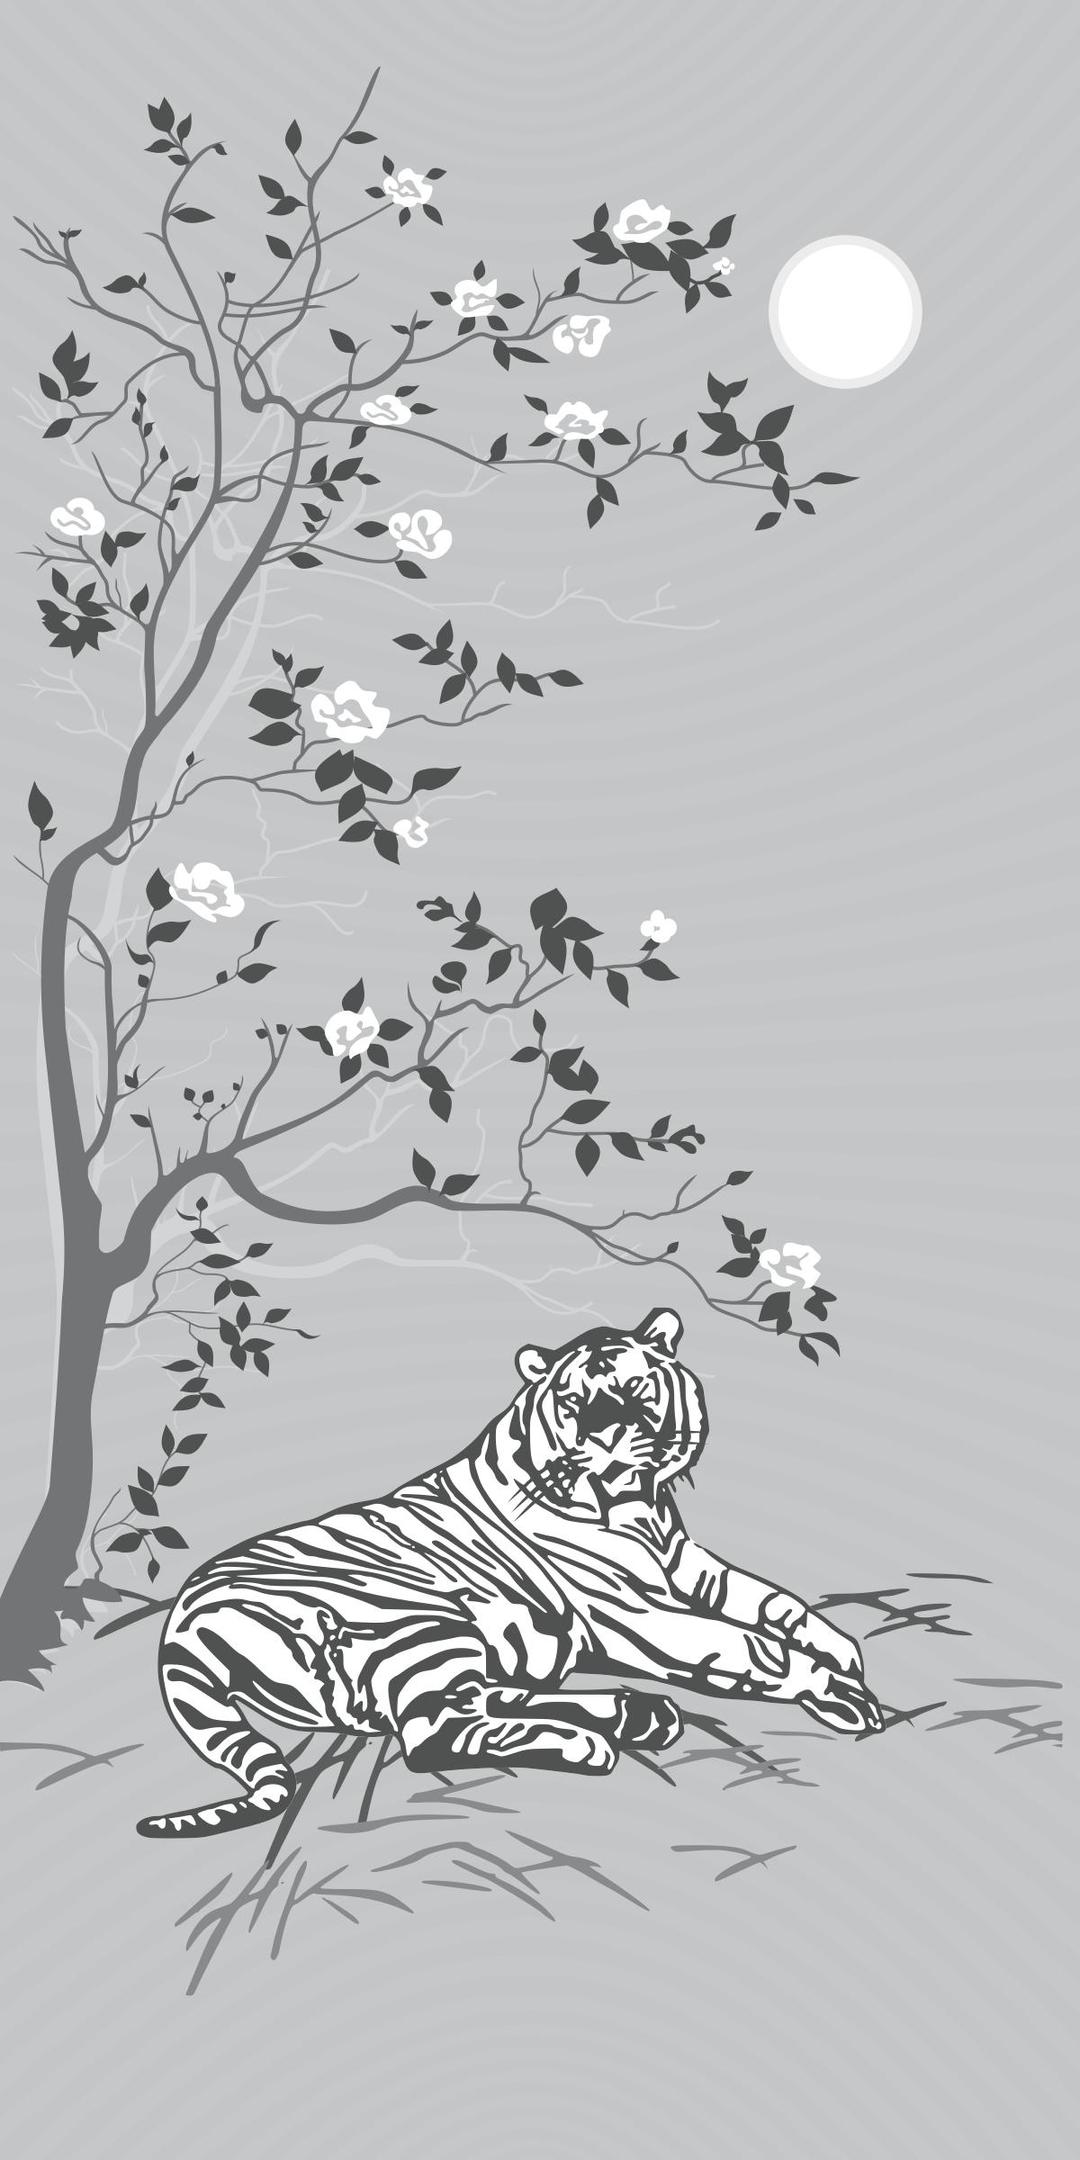 Tiger png transparent